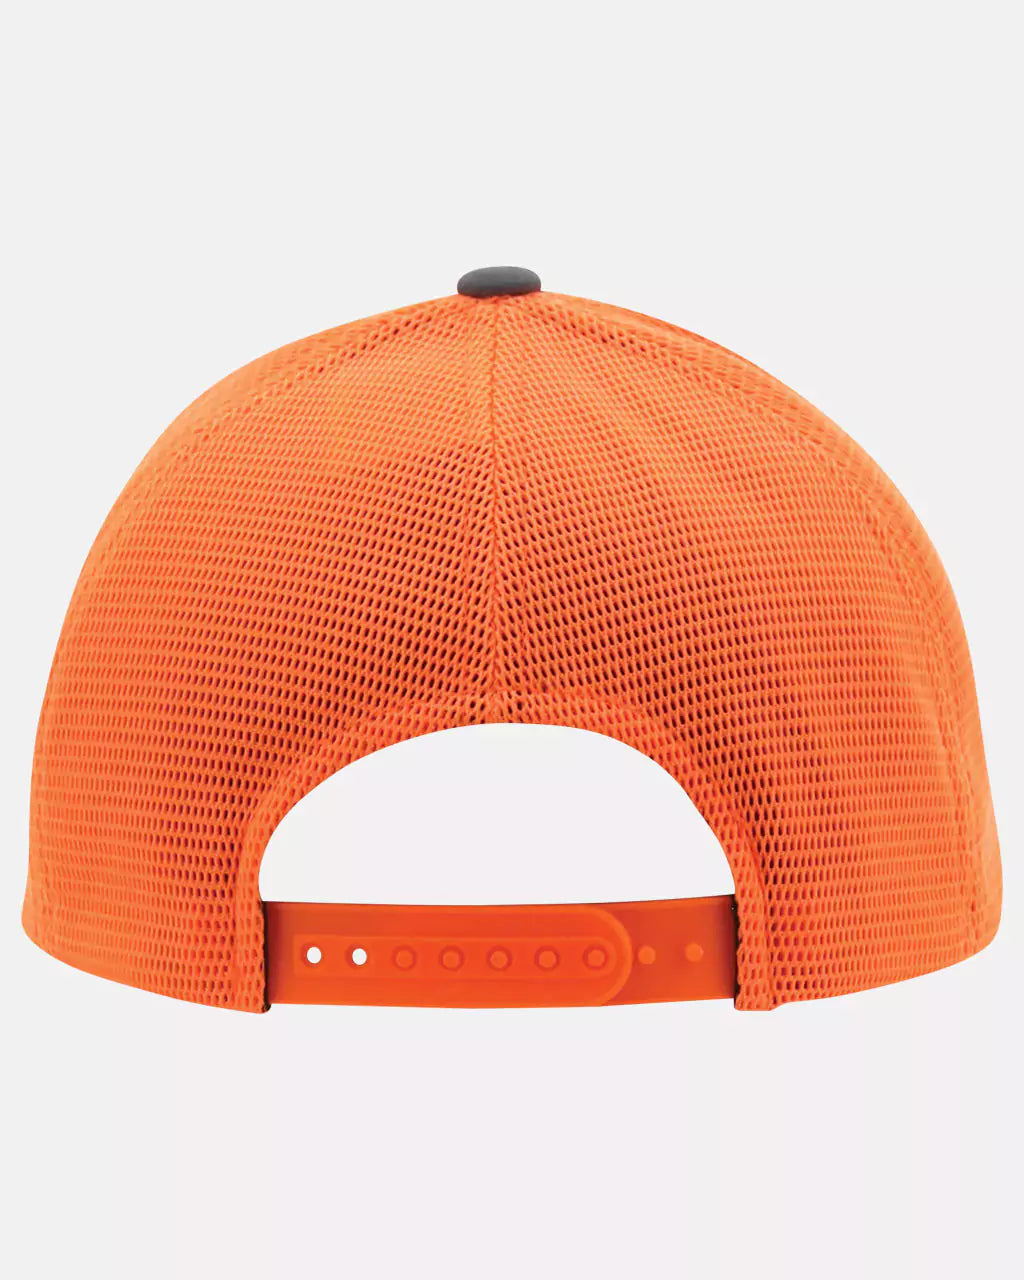 Caterpillar Men's Hi-Vis Trademark Cap, Orange, One Size